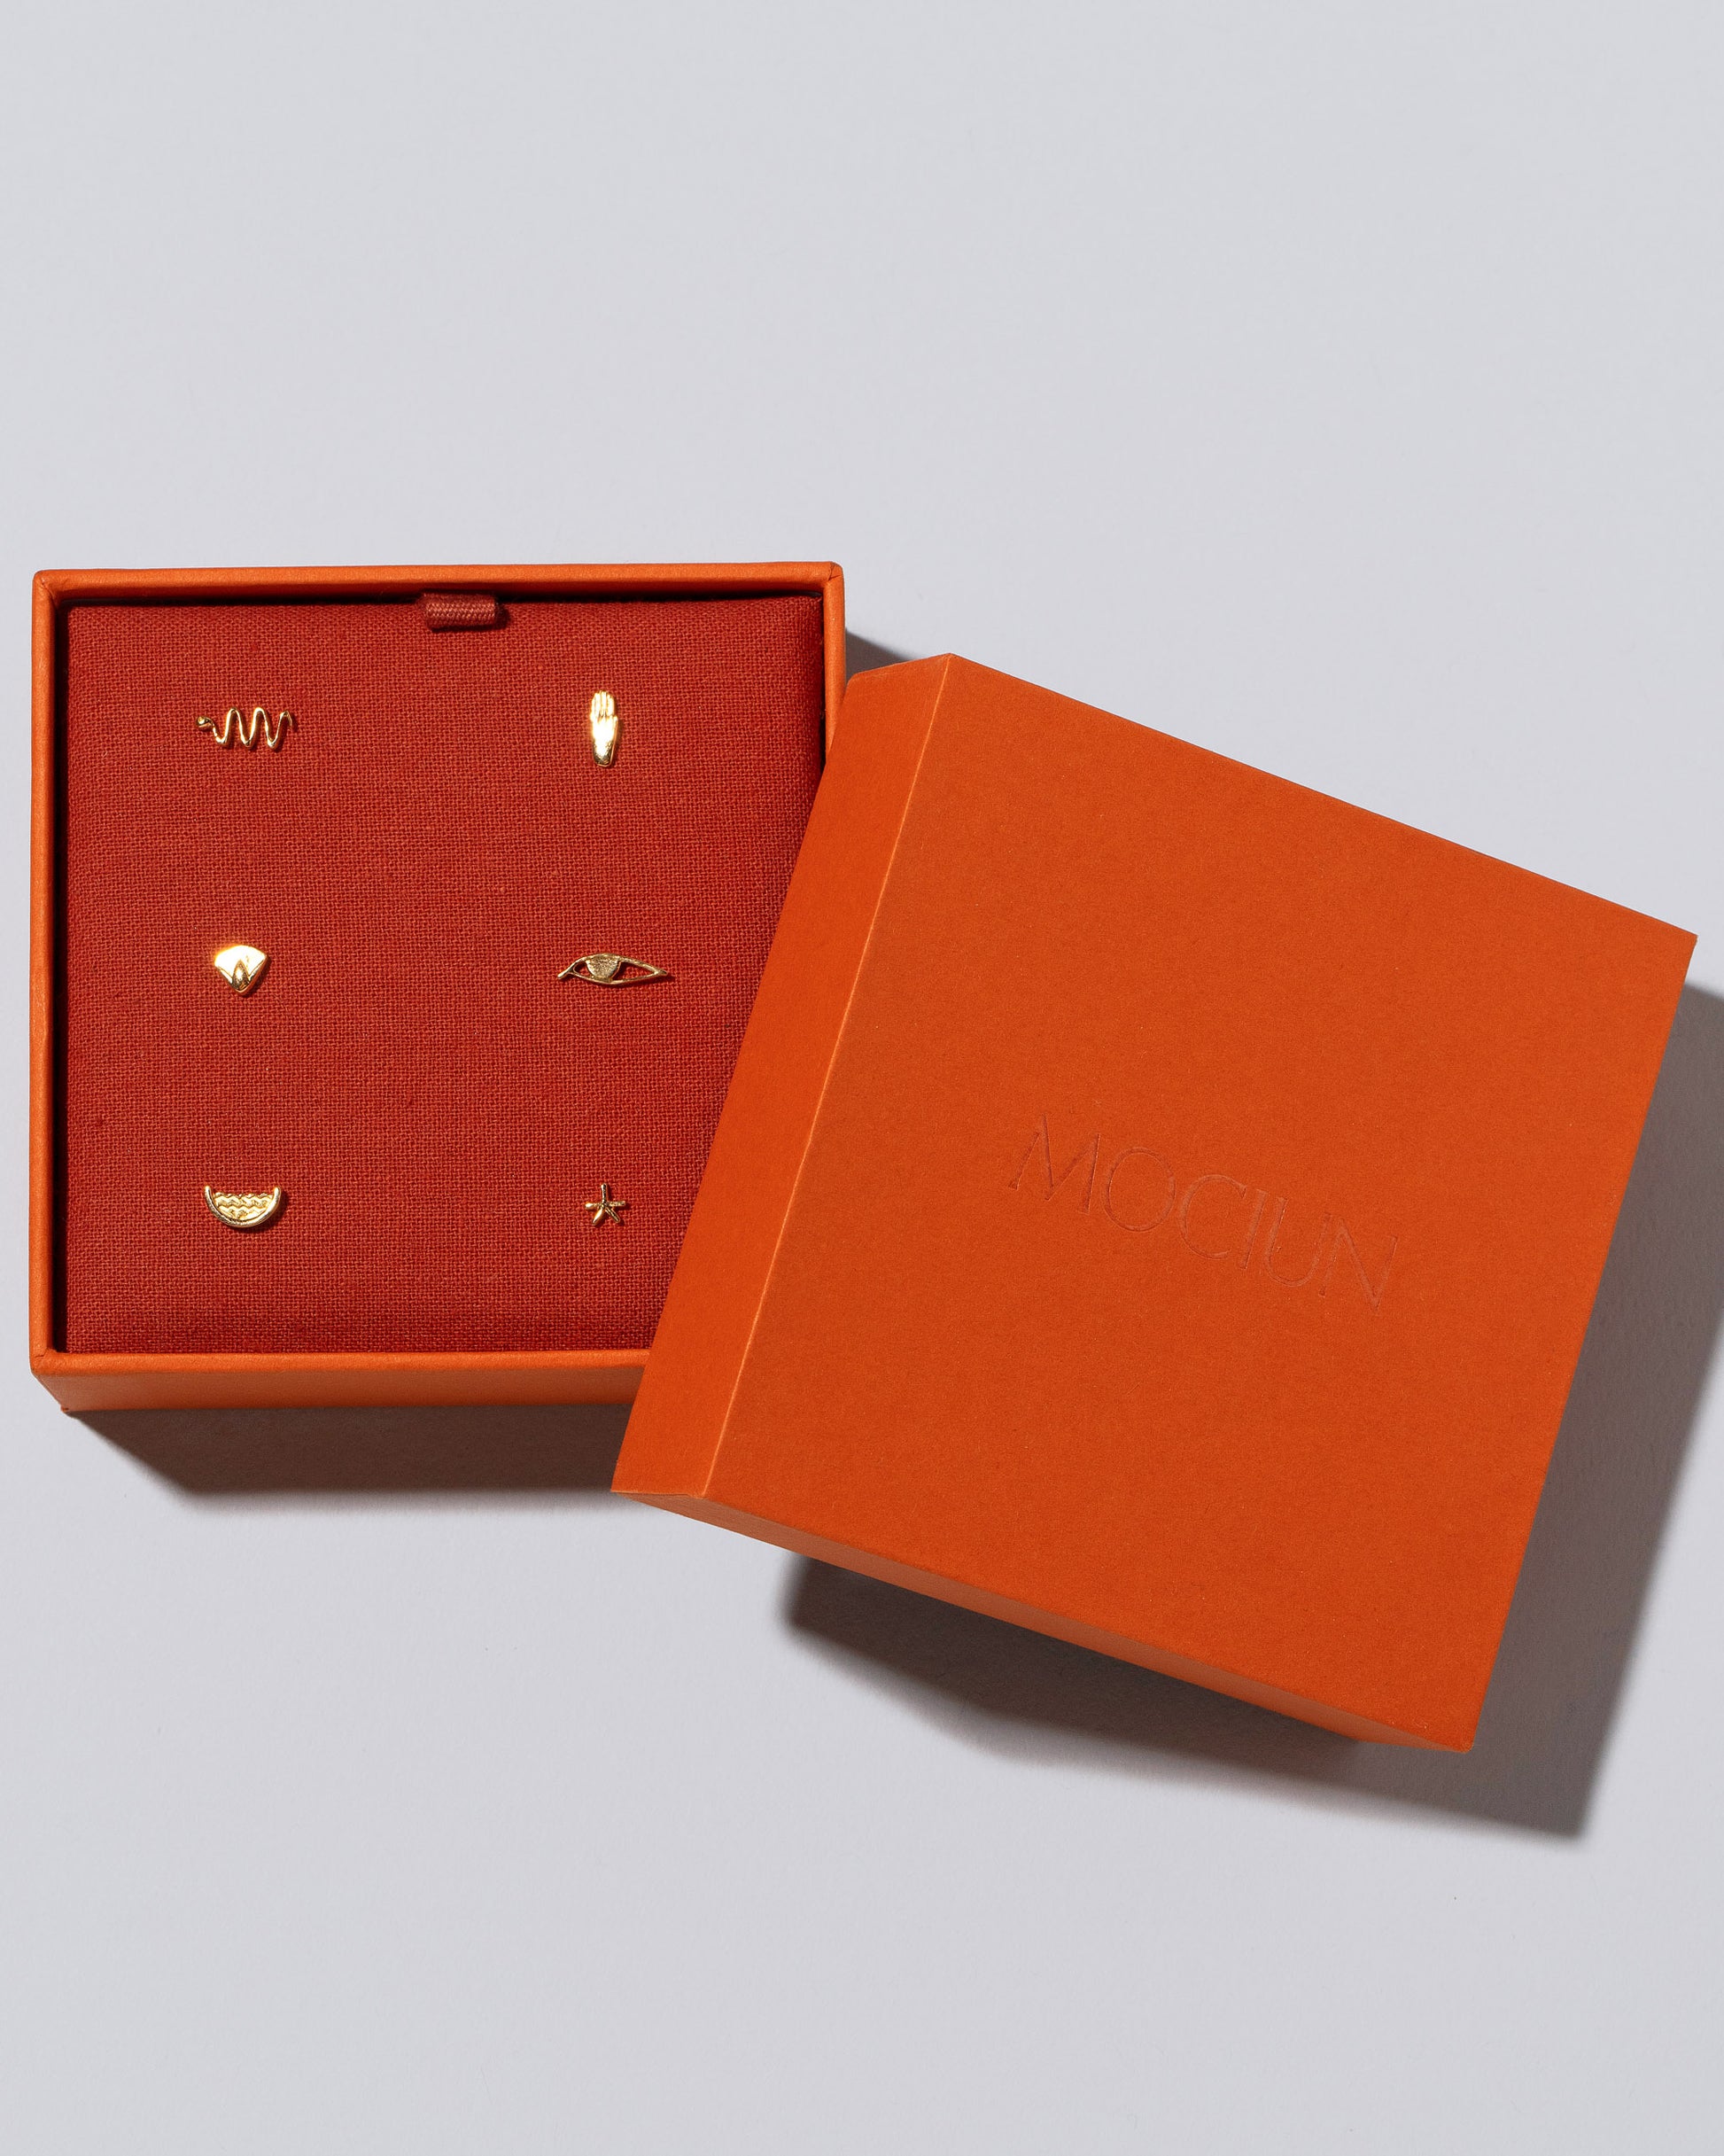 Six Talisman Stud Earring Singles Set in Mociun Box on light color background.